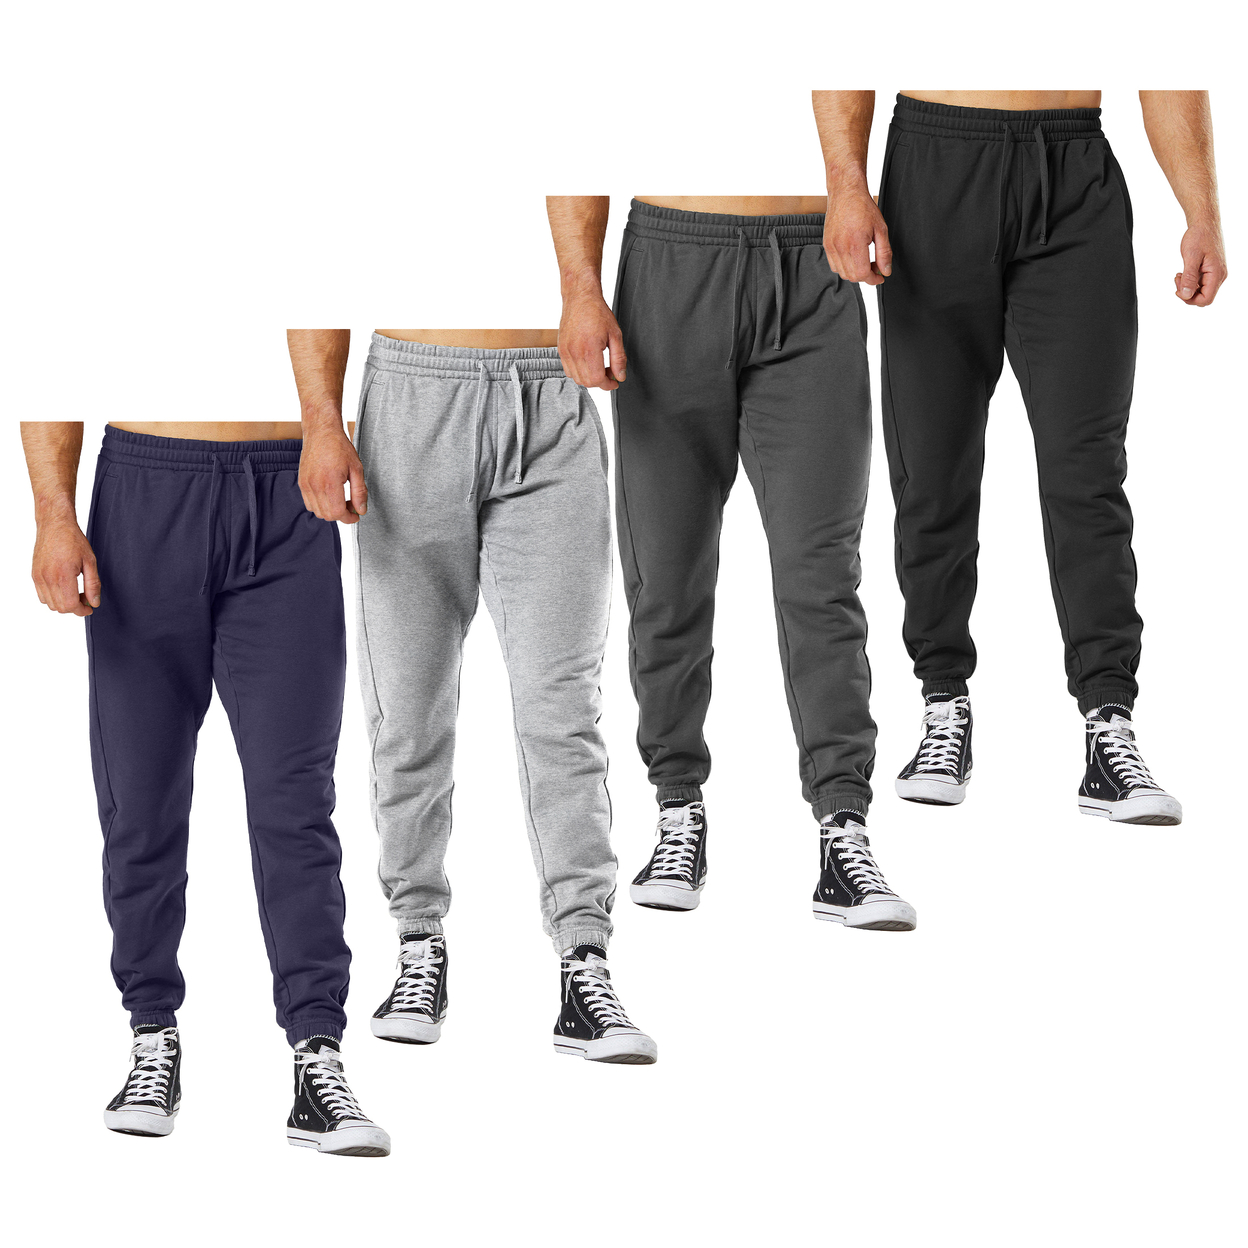 Multi-Pack: Men's Ultra-Soft Cozy Winter Warm Casual Fleece-Lined Sweatpants Jogger - 3-pack, Medium